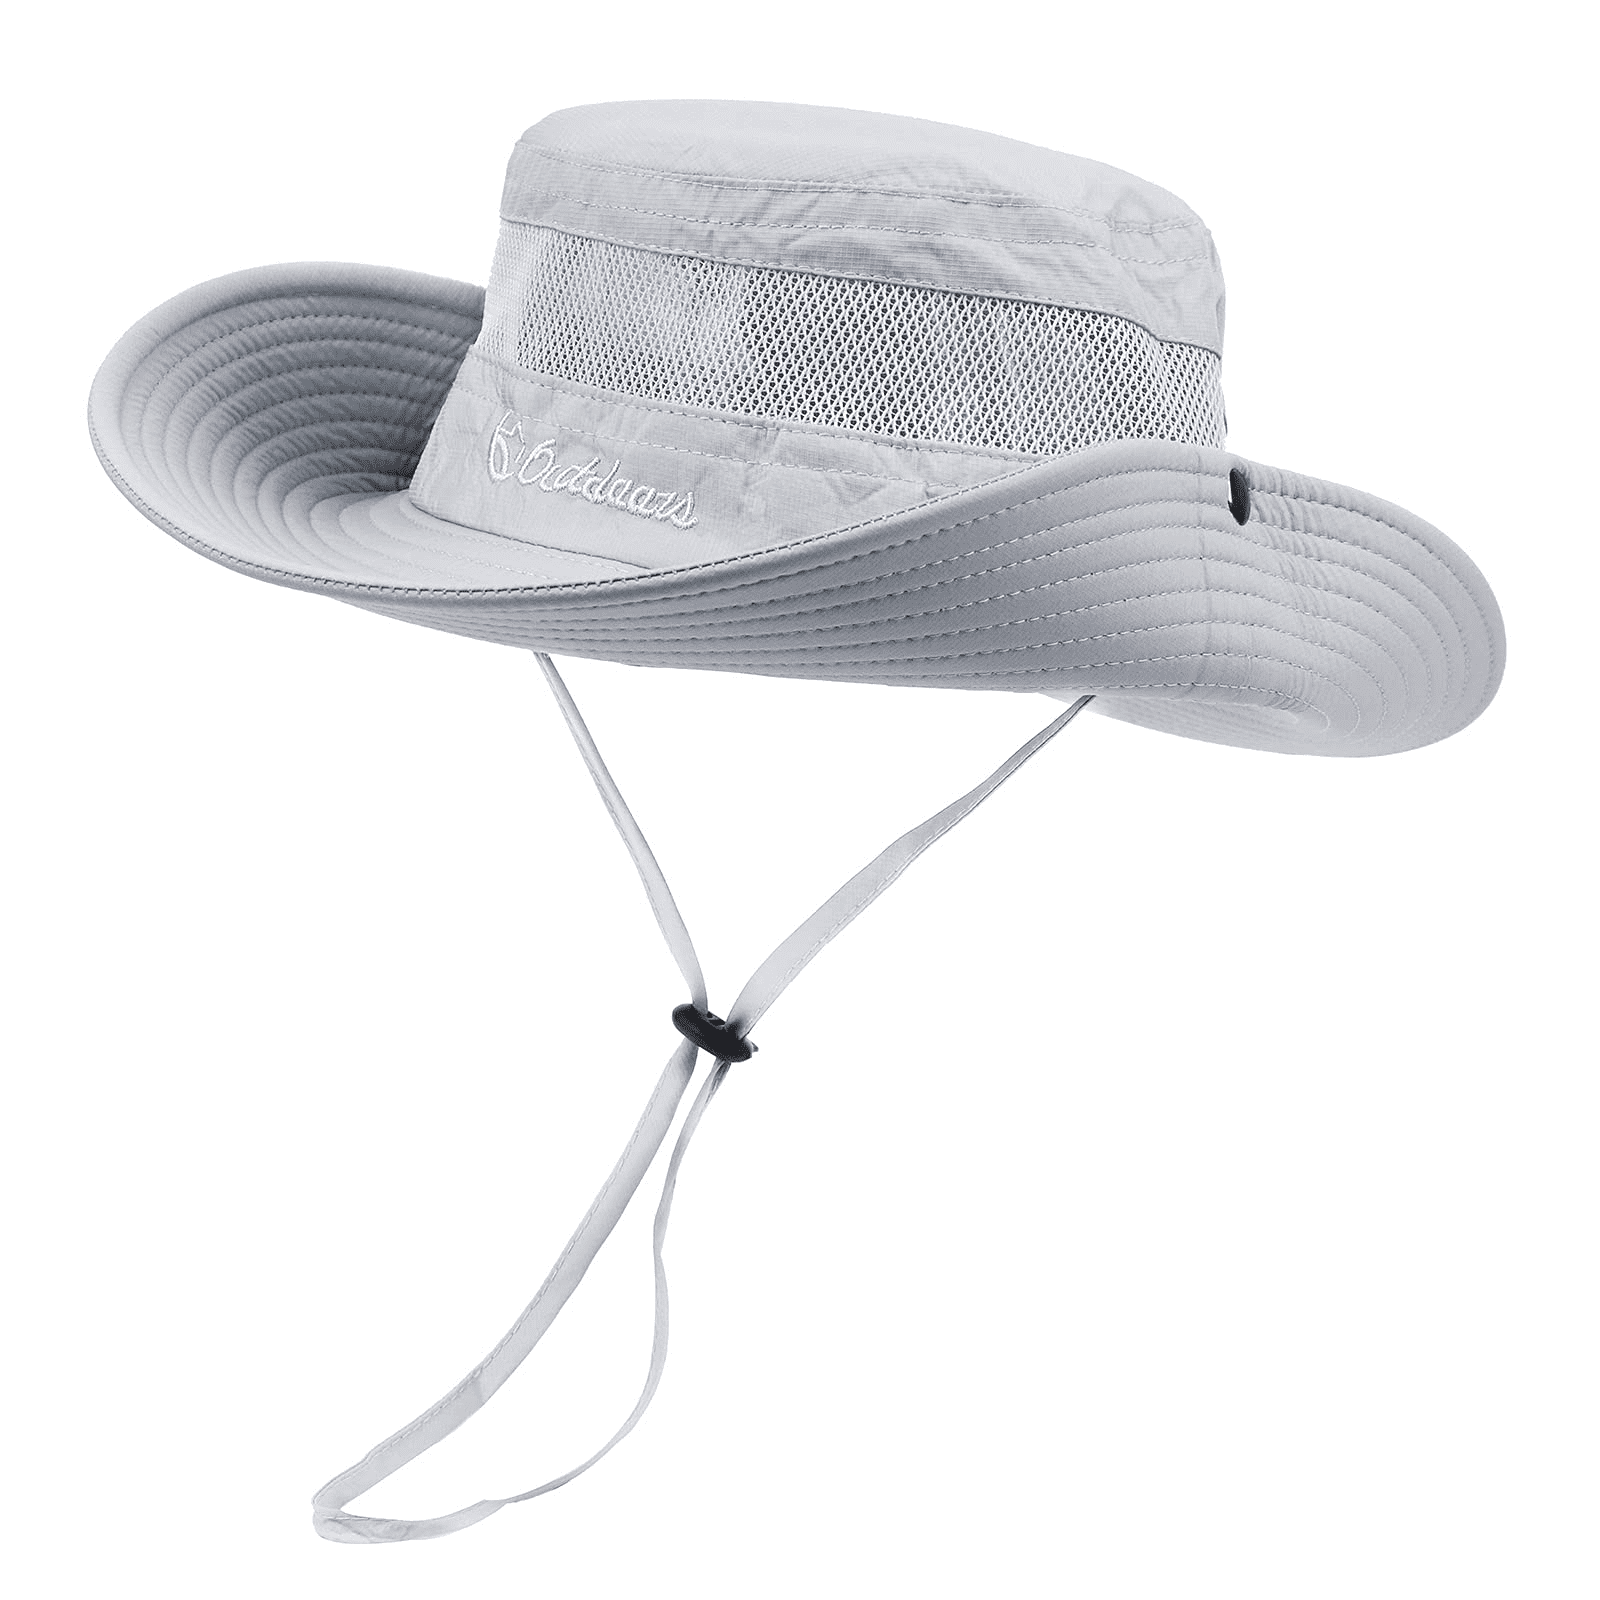 American Trends Sun Hats for Men Women Wide Brim Fishing Hat